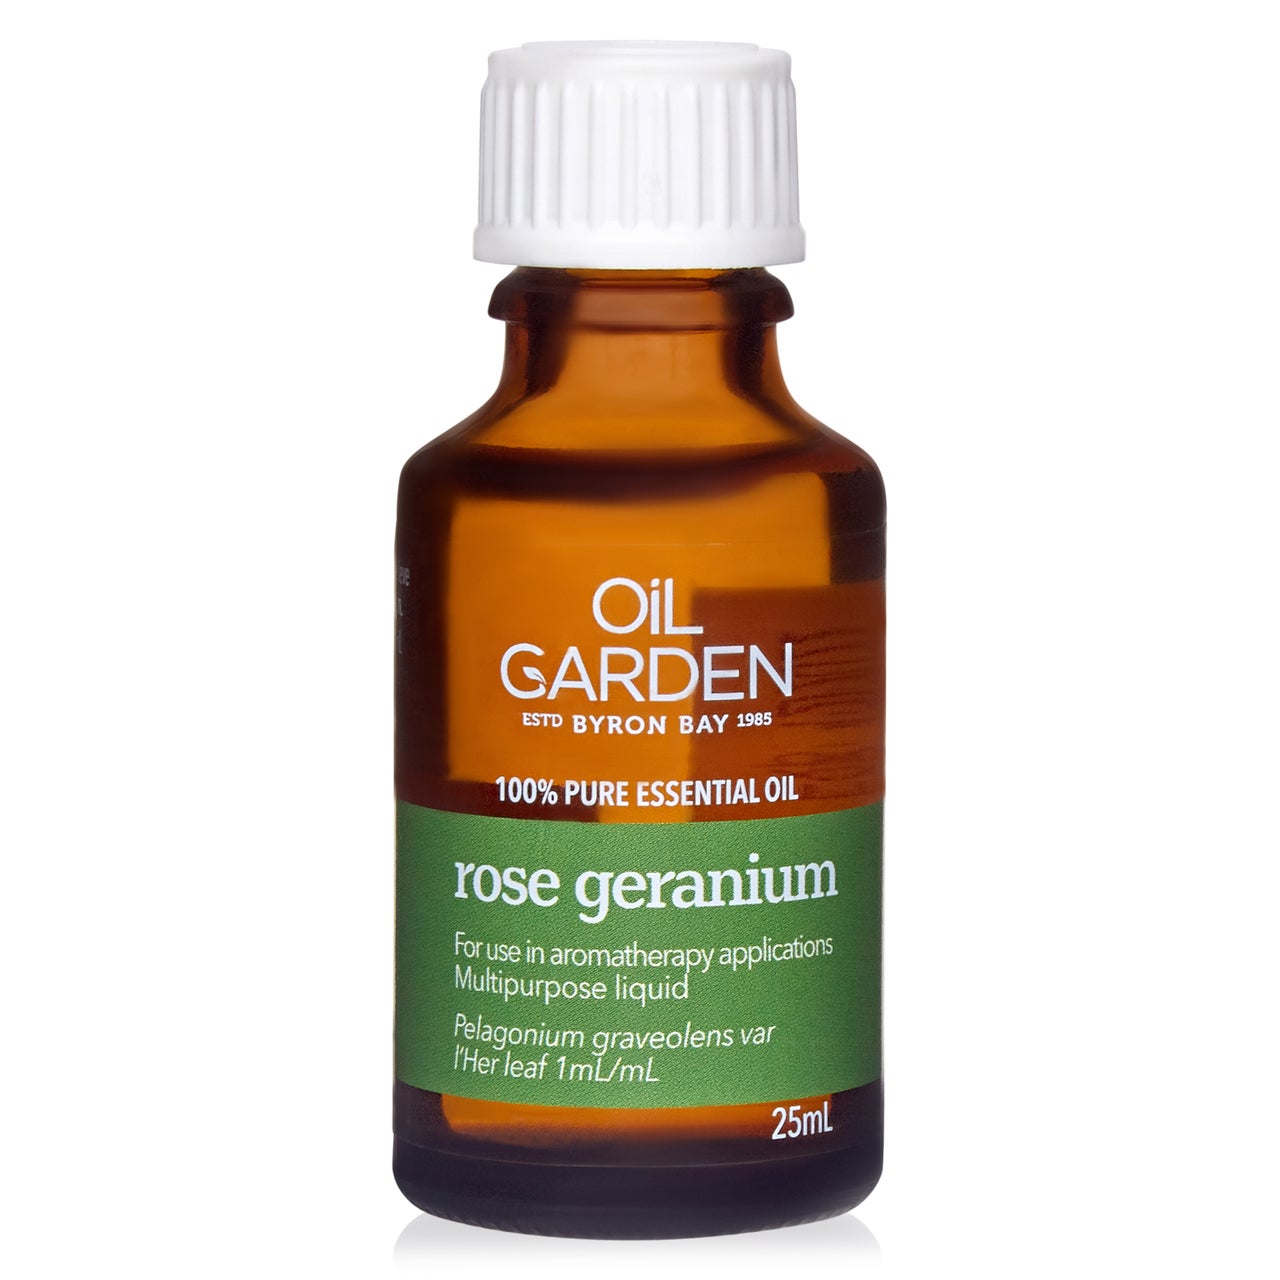 Oil Garden Rose Geranium 25mL 100% Pure Essential Oil Therapeutic Aromatherapy Ease